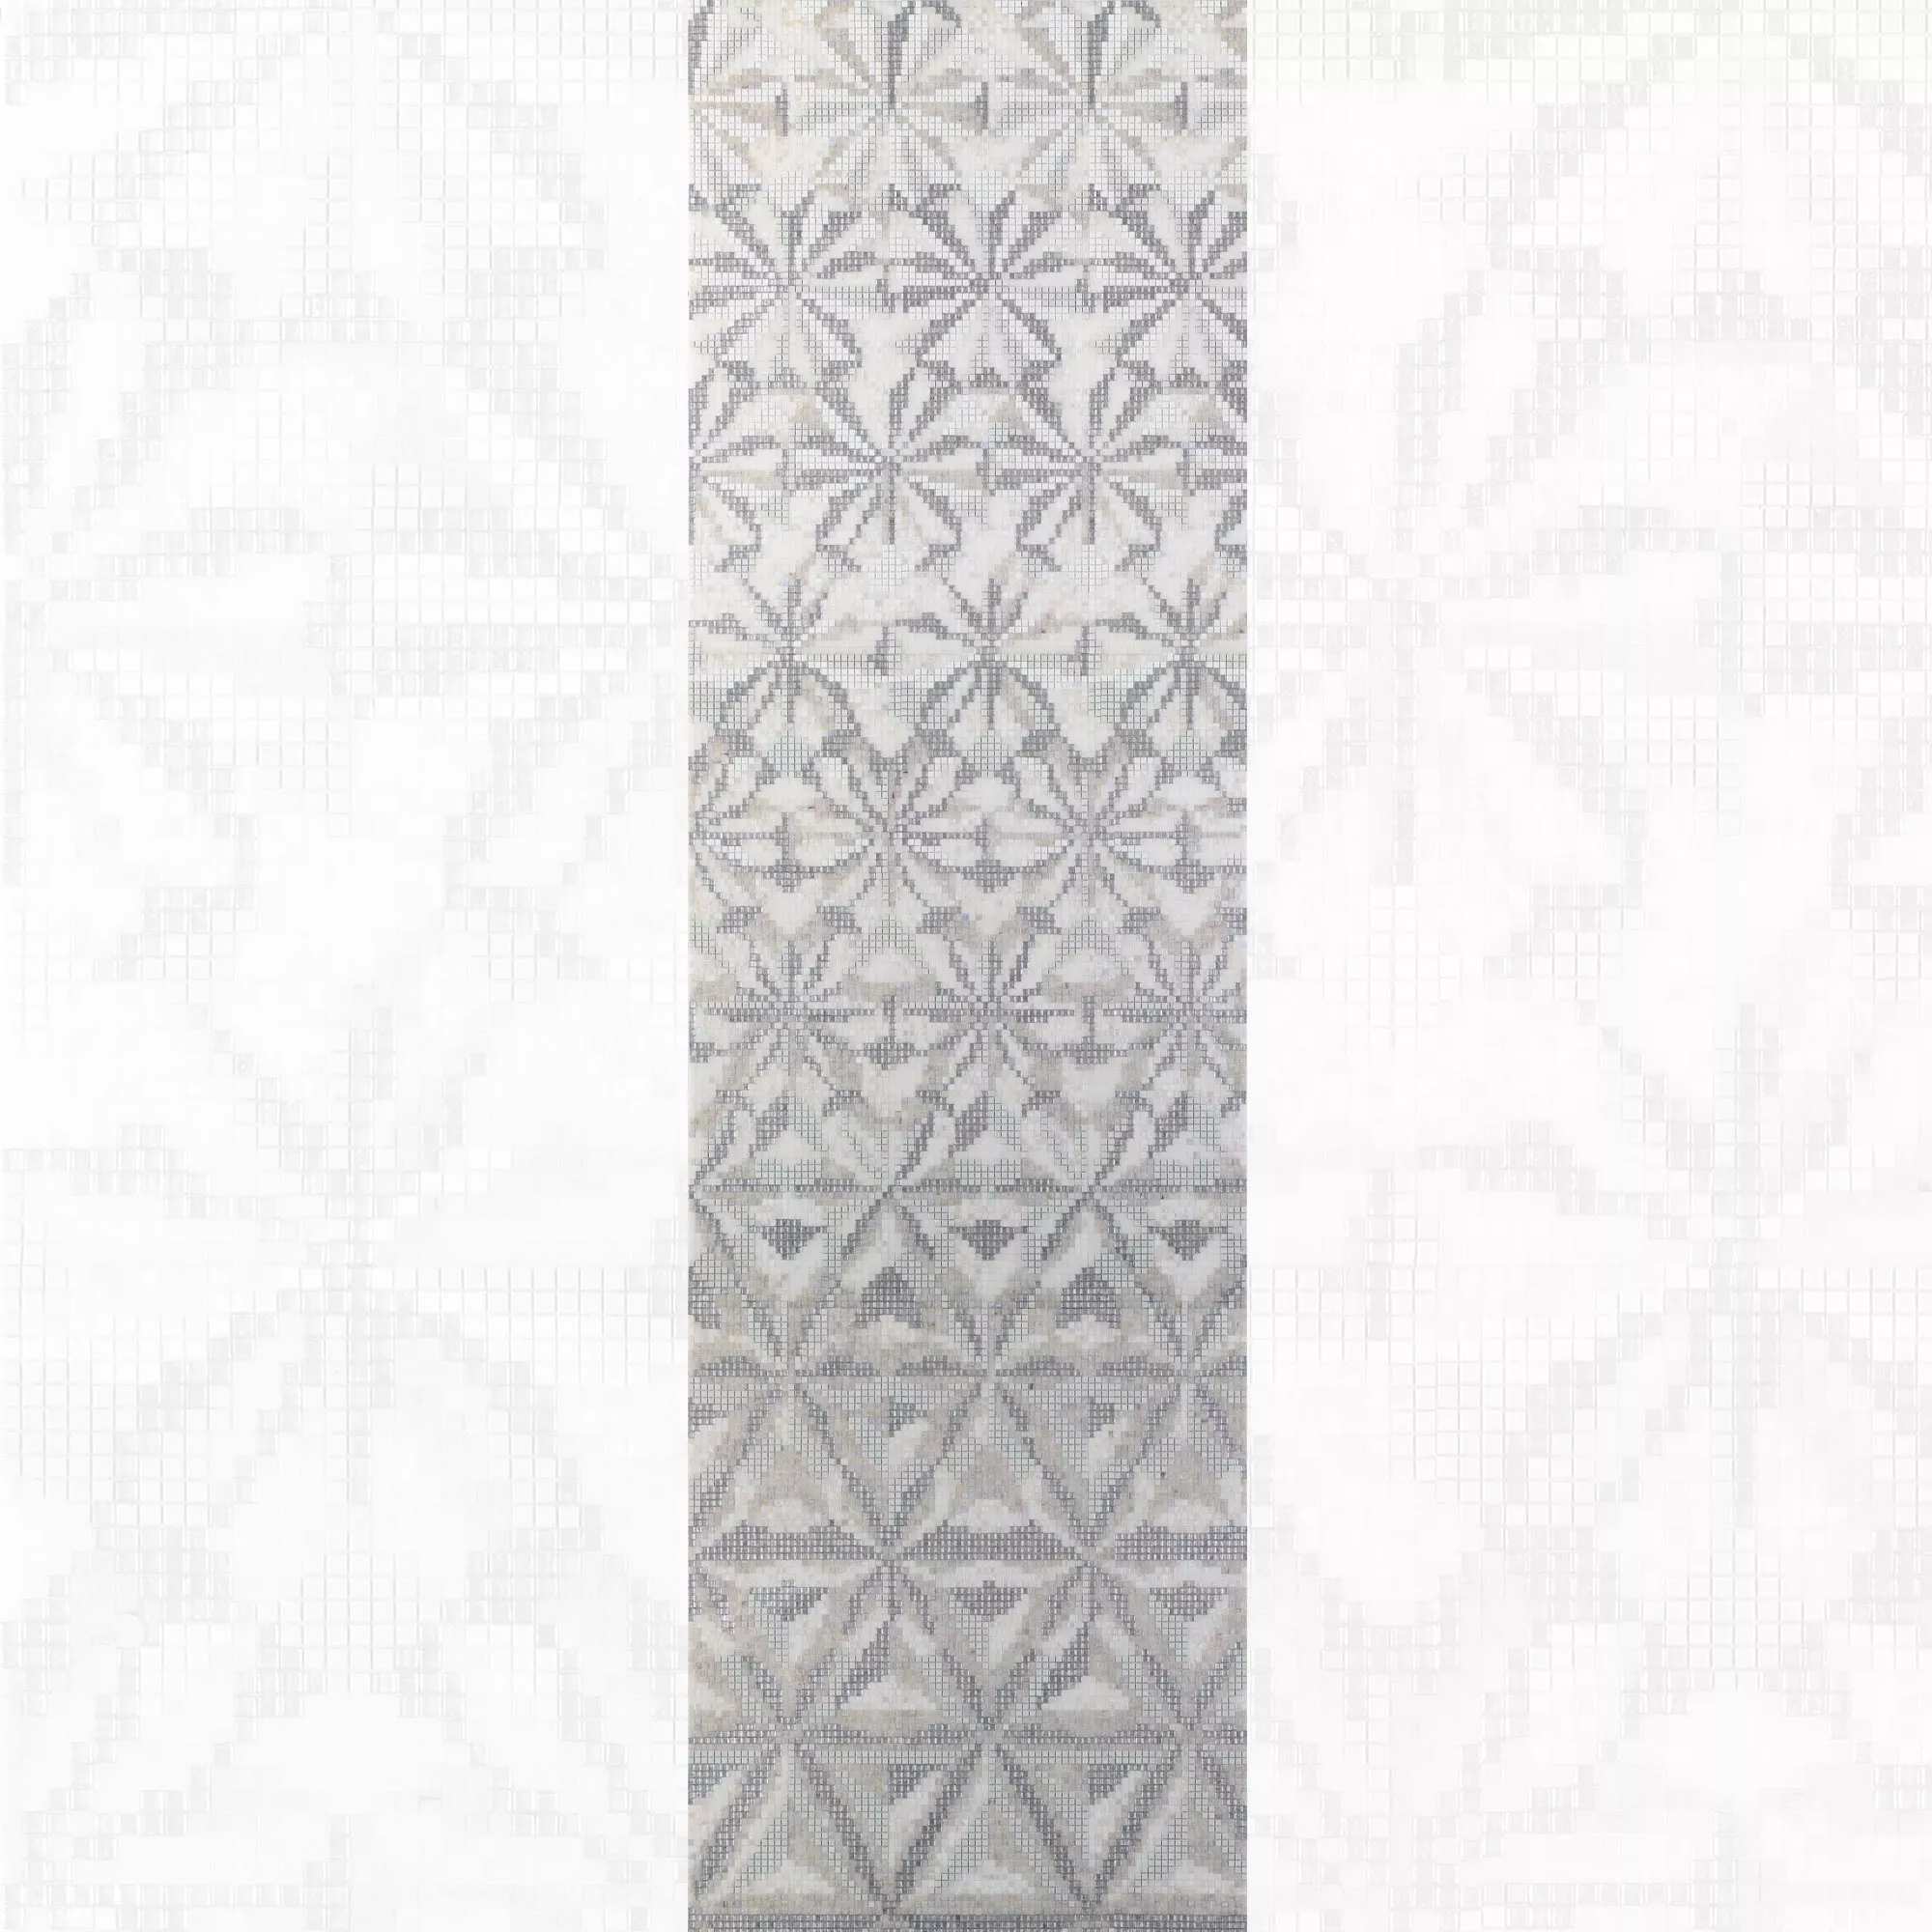 Mozaic De Sticlă Imagine Magicflower White 130x240cm